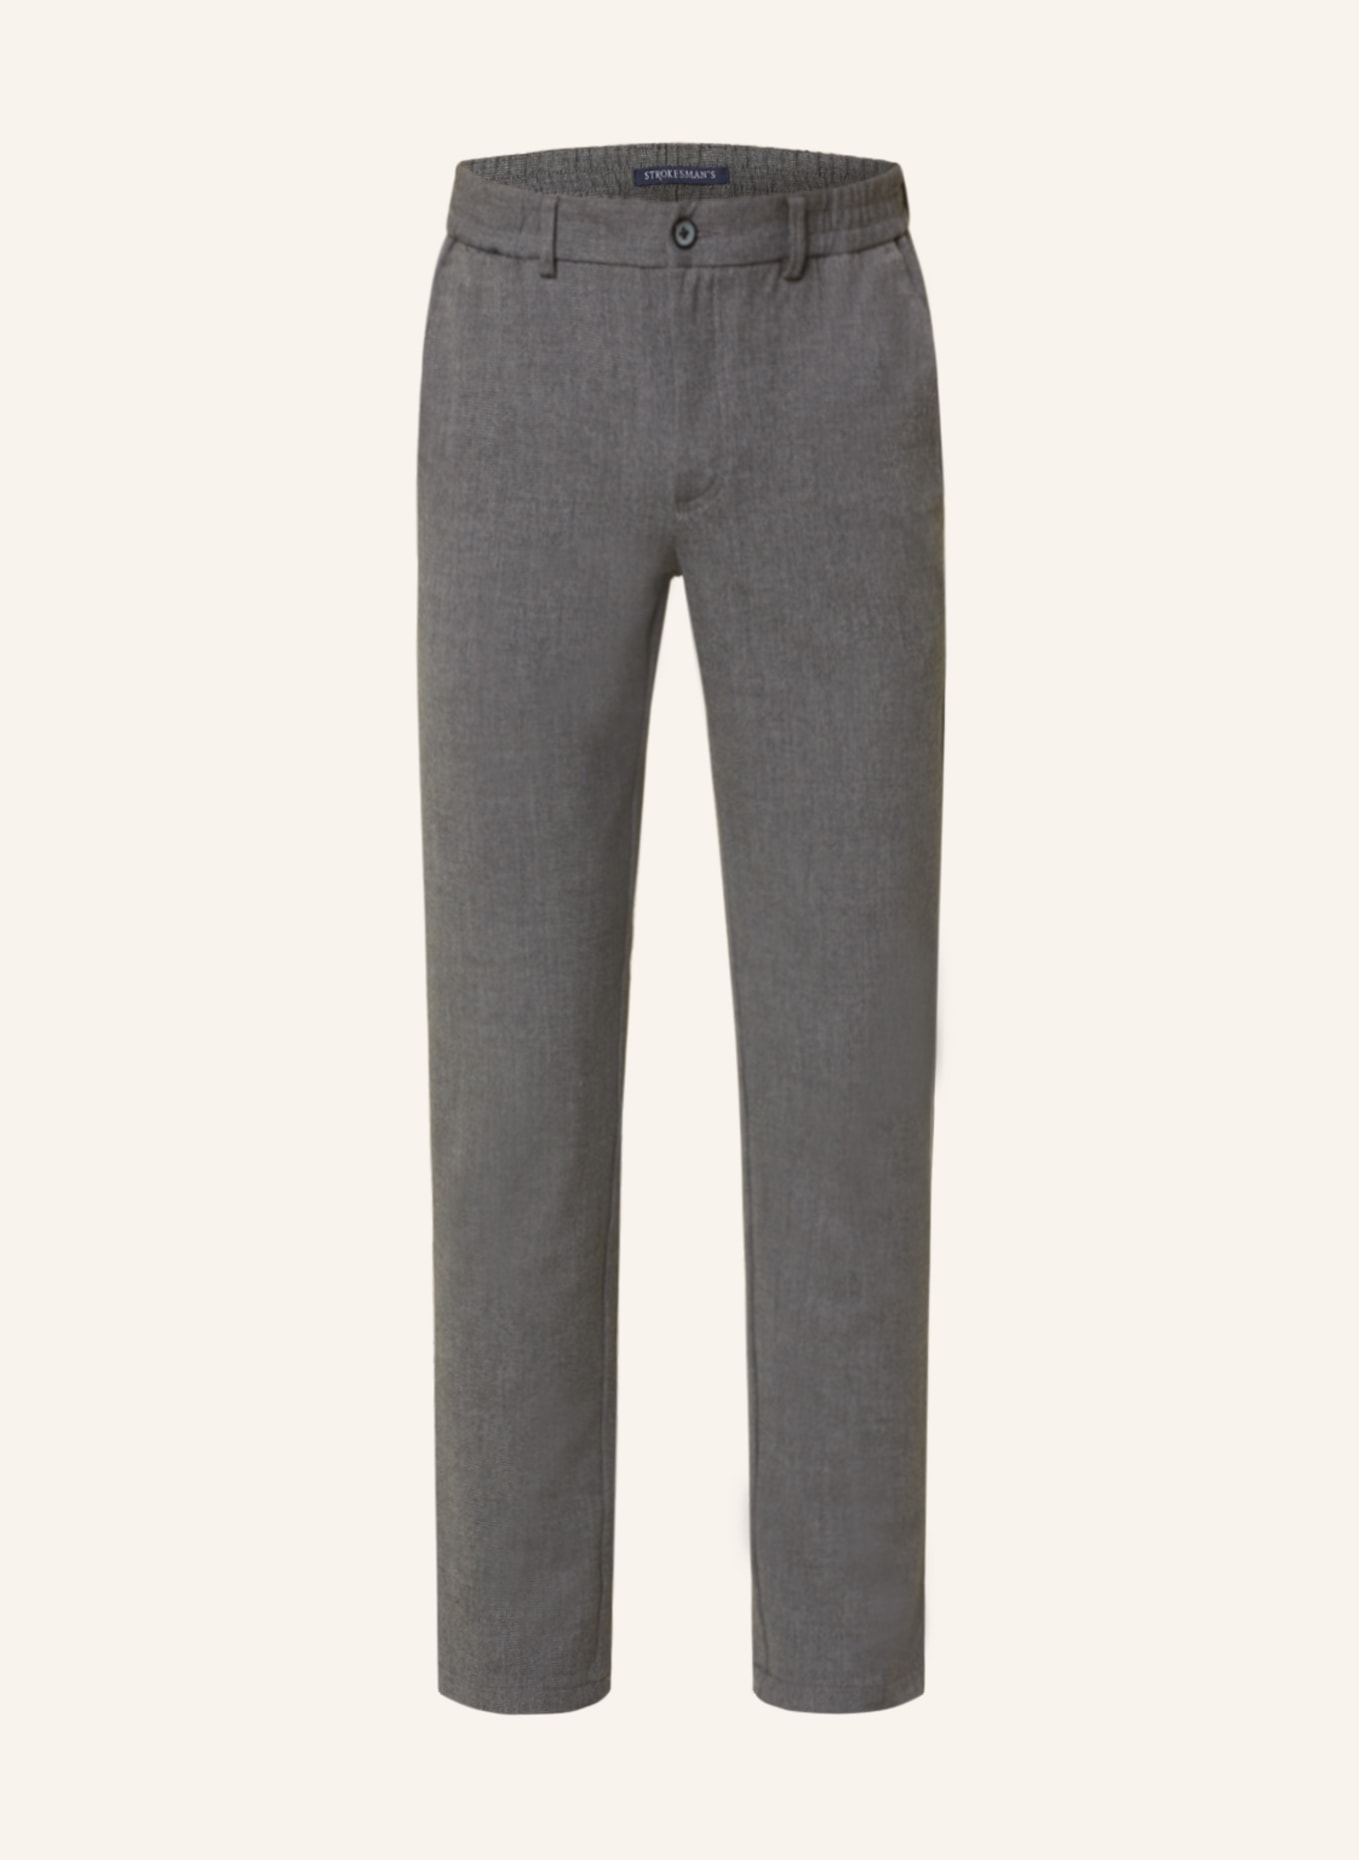 STROKESMAN'S Jerseyhose Comfort Fit, Farbe: 0900 light grey (Bild 1)